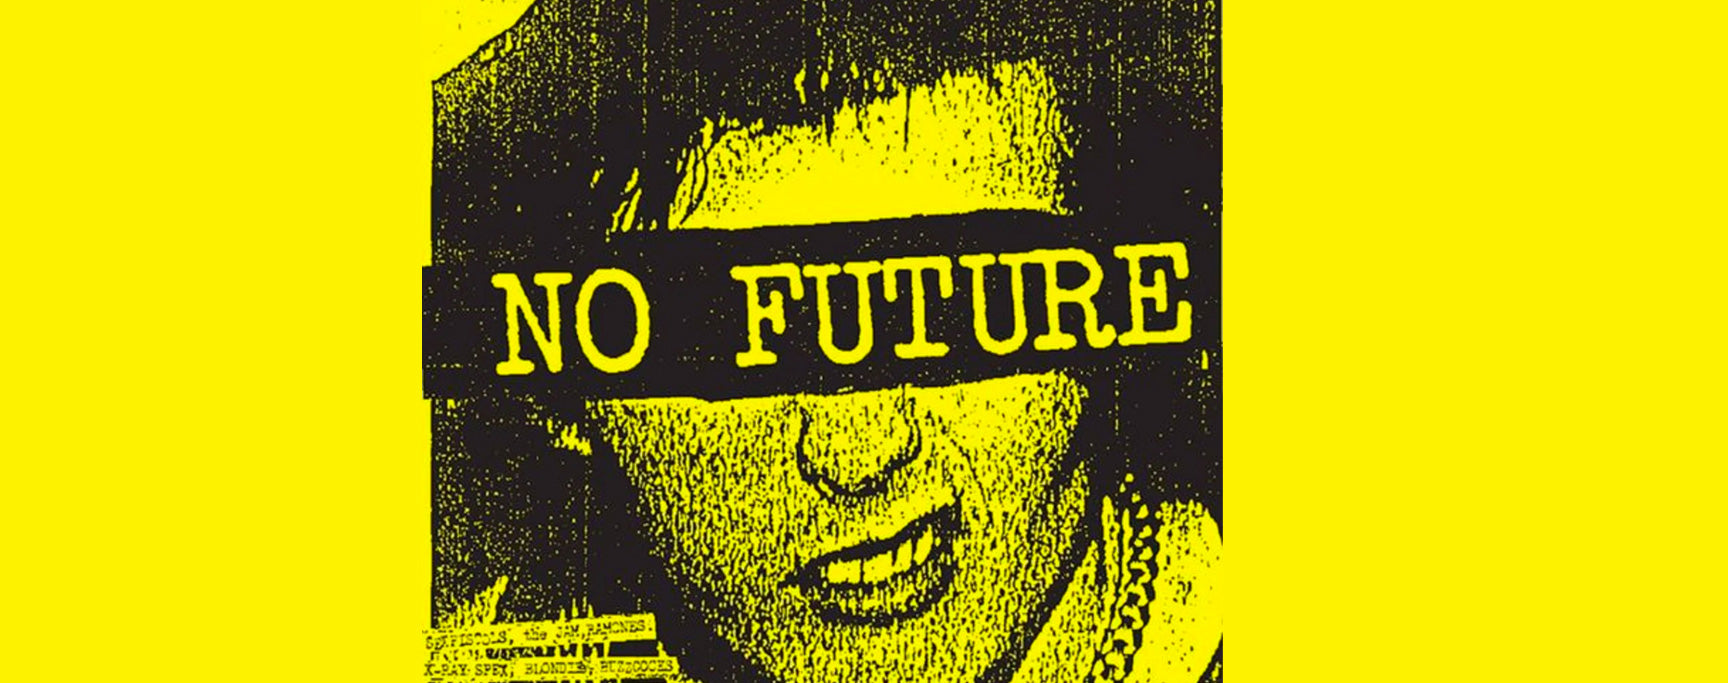 No future punk